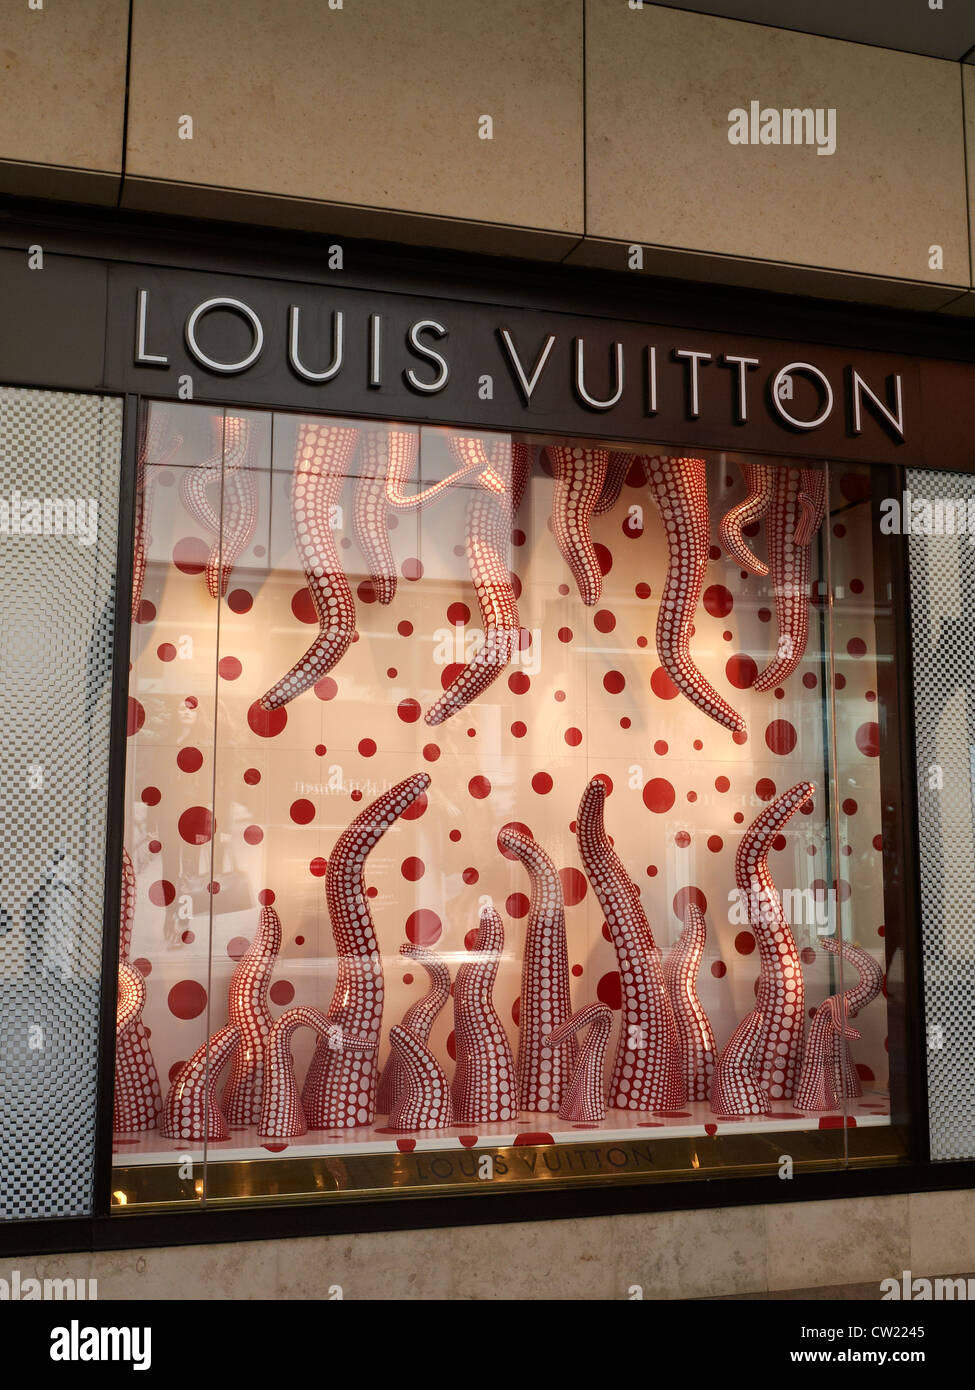 Erobre Slagskib Overbevisende Louis Vuitton window display in Manchester UK Stock Photo - Alamy